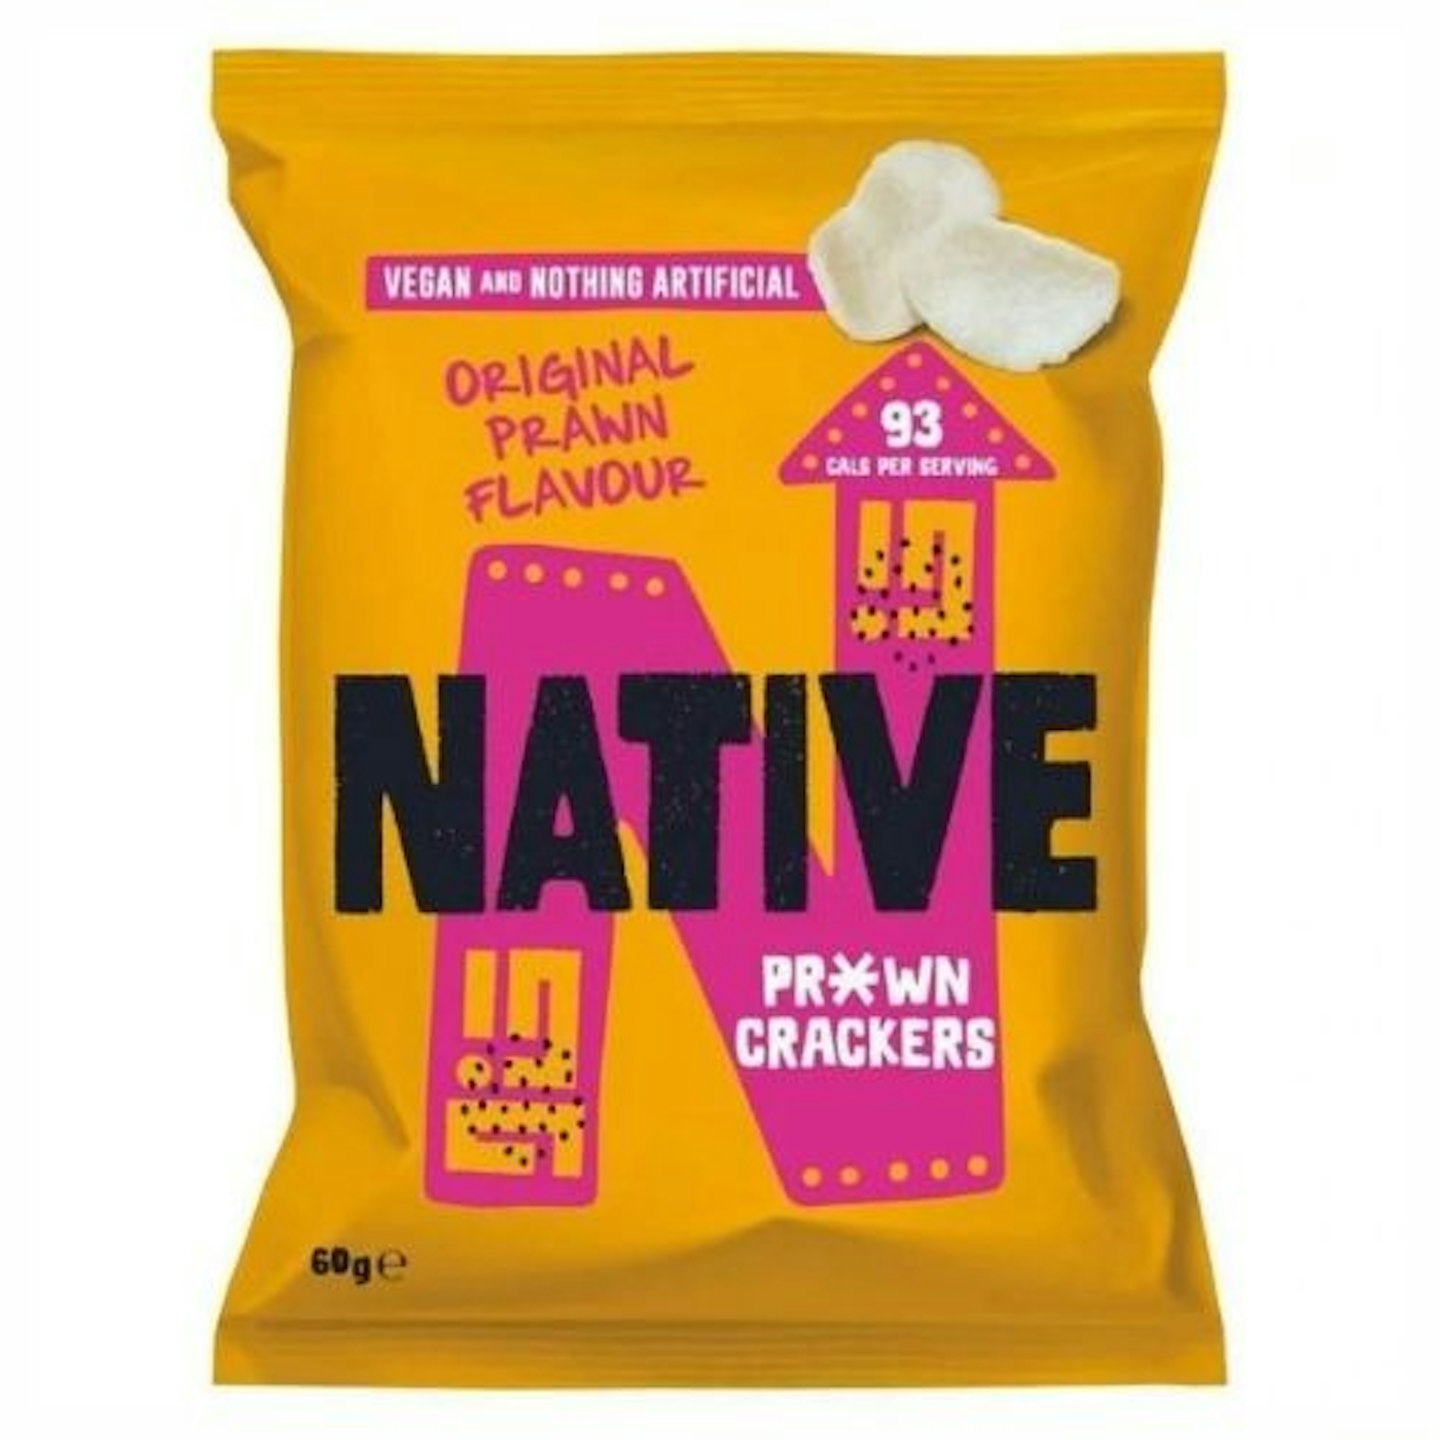 Native - Prawn Crackers: - Original Prawn Flavour 60g